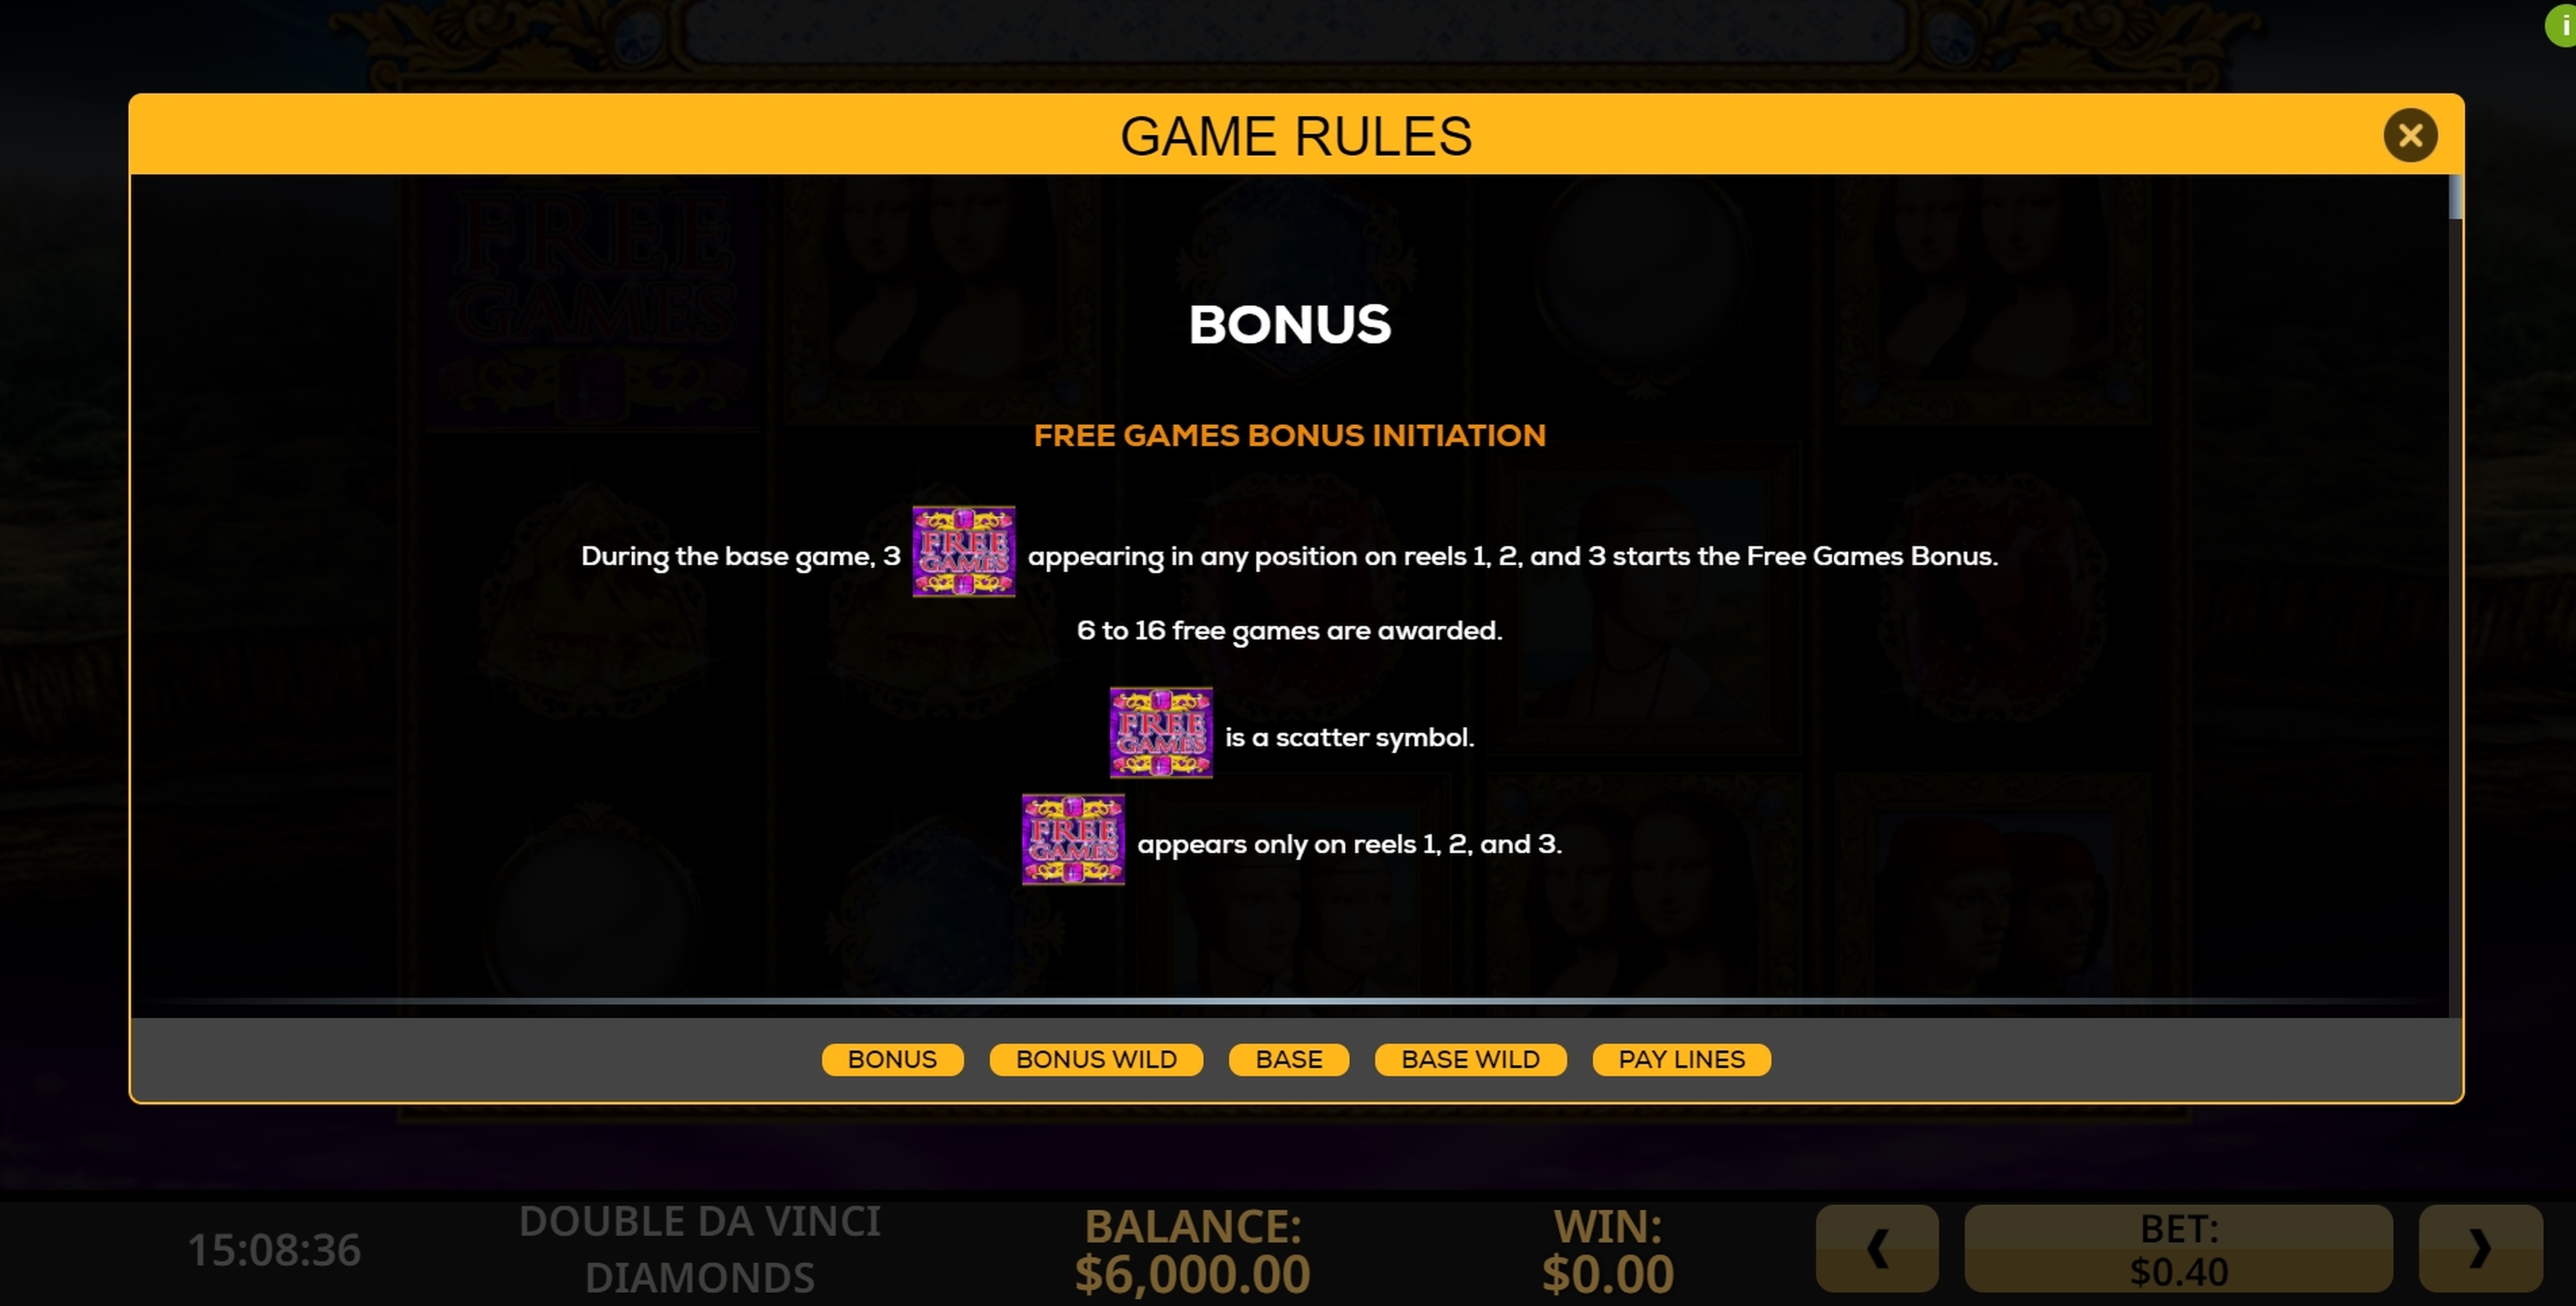 Info of Double Da Vinci Diamonds Slot Game by High 5 Games